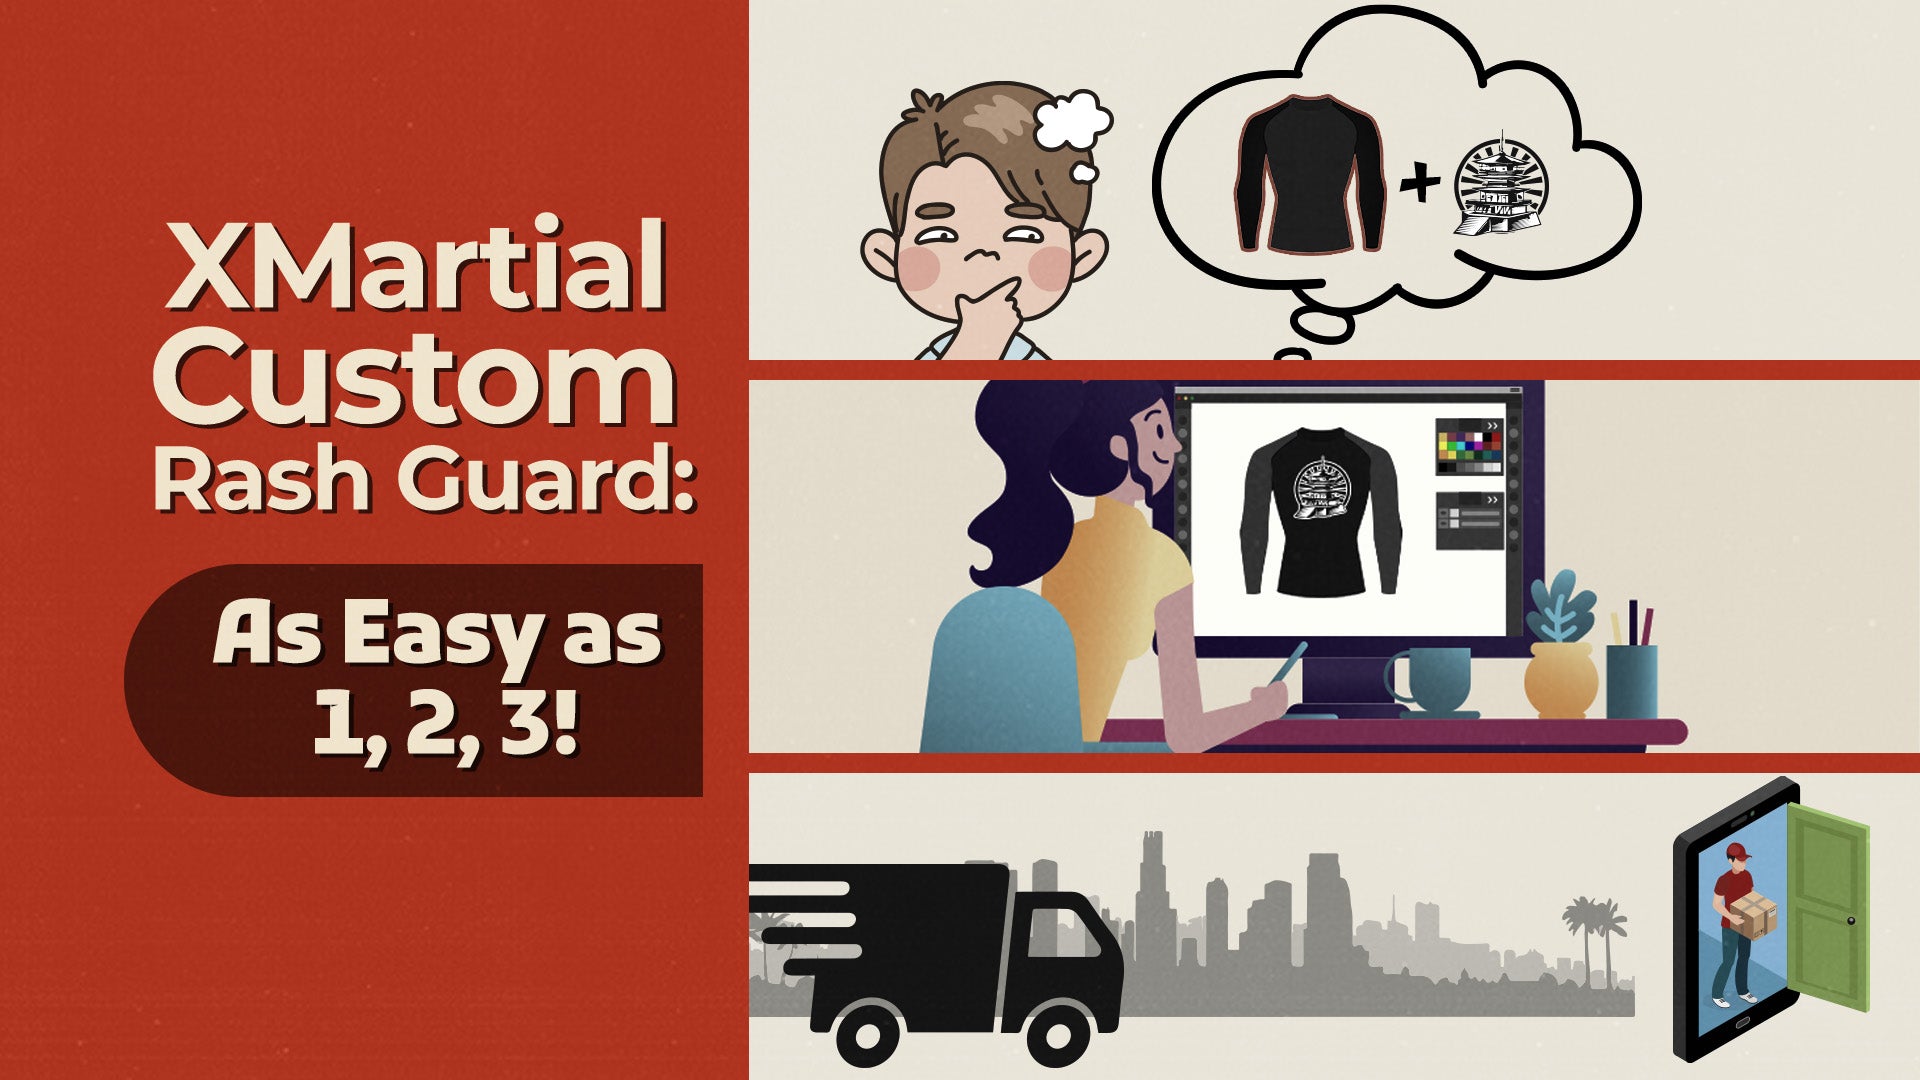 XMartial Custom Rash Guards: As Easy as 1, 2, 3!